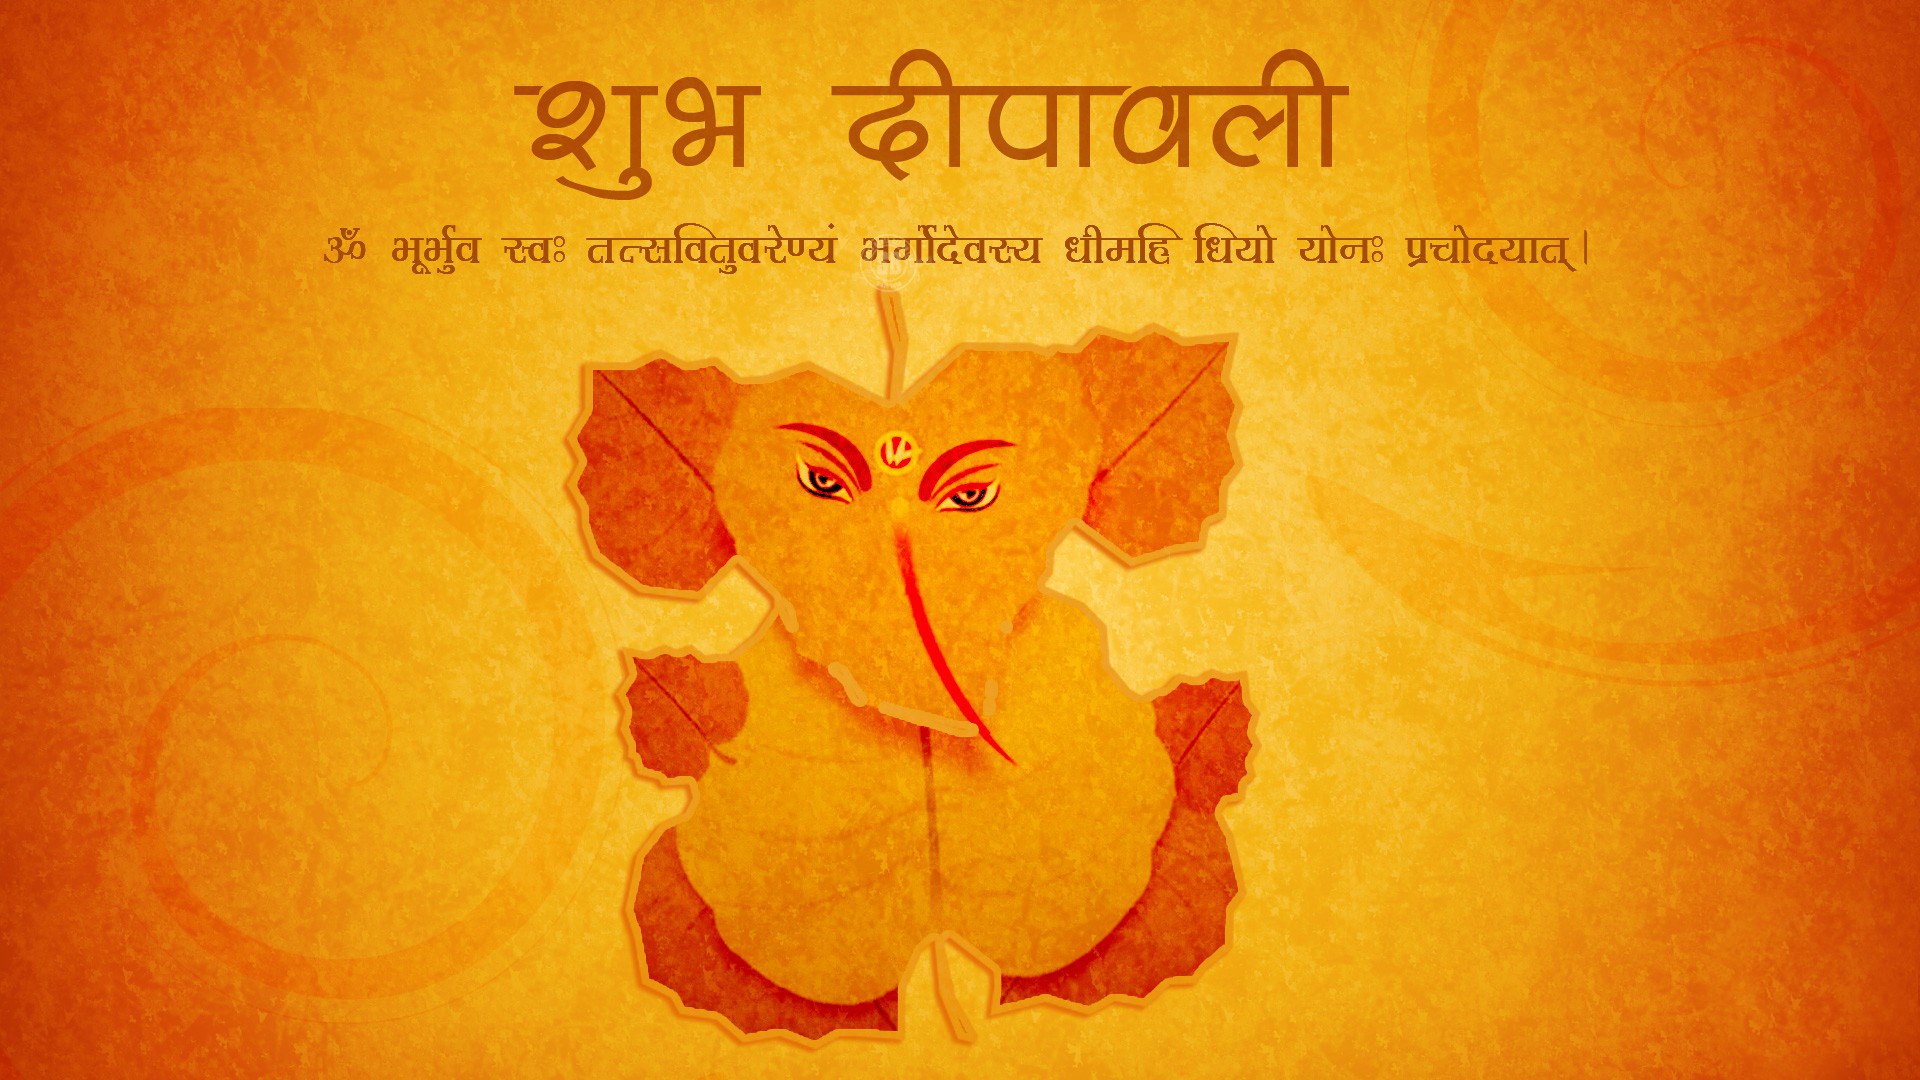 Happy Diwali Wallpaper Image Quotes In Hindi Download